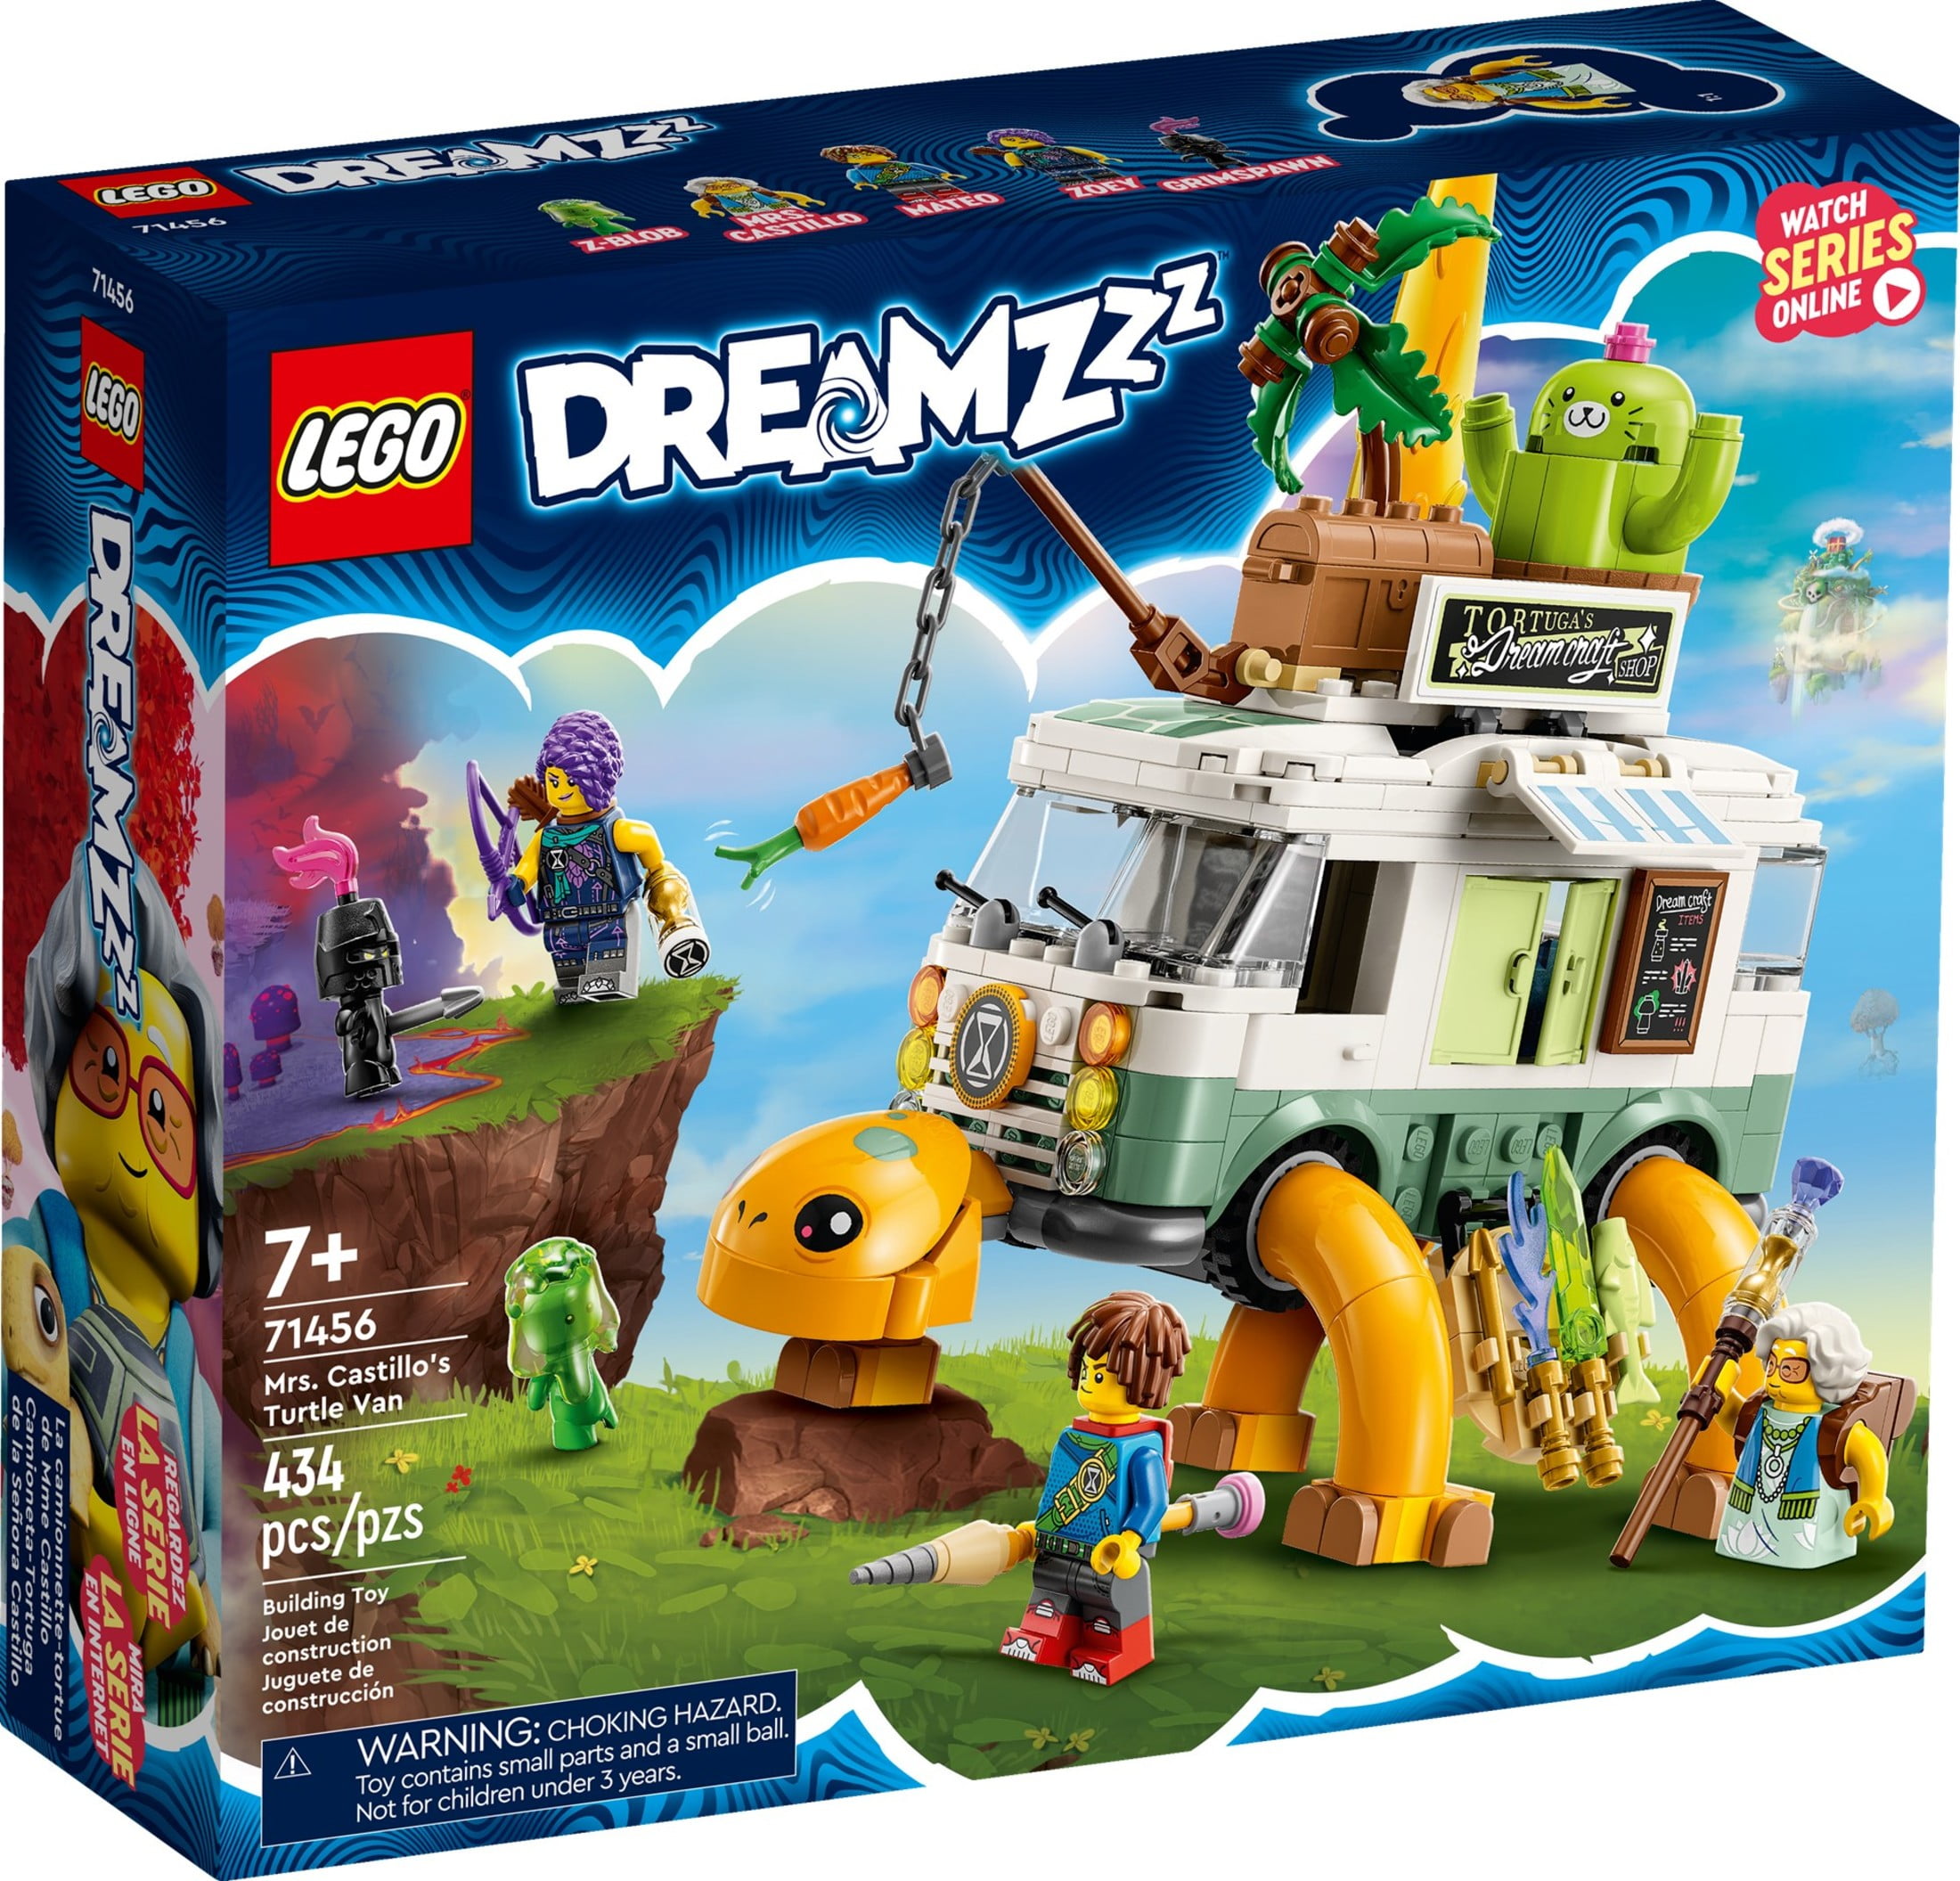 LEGO Dreamz Minifigure, Mrs Castillo , drm031, From Set 71461 New